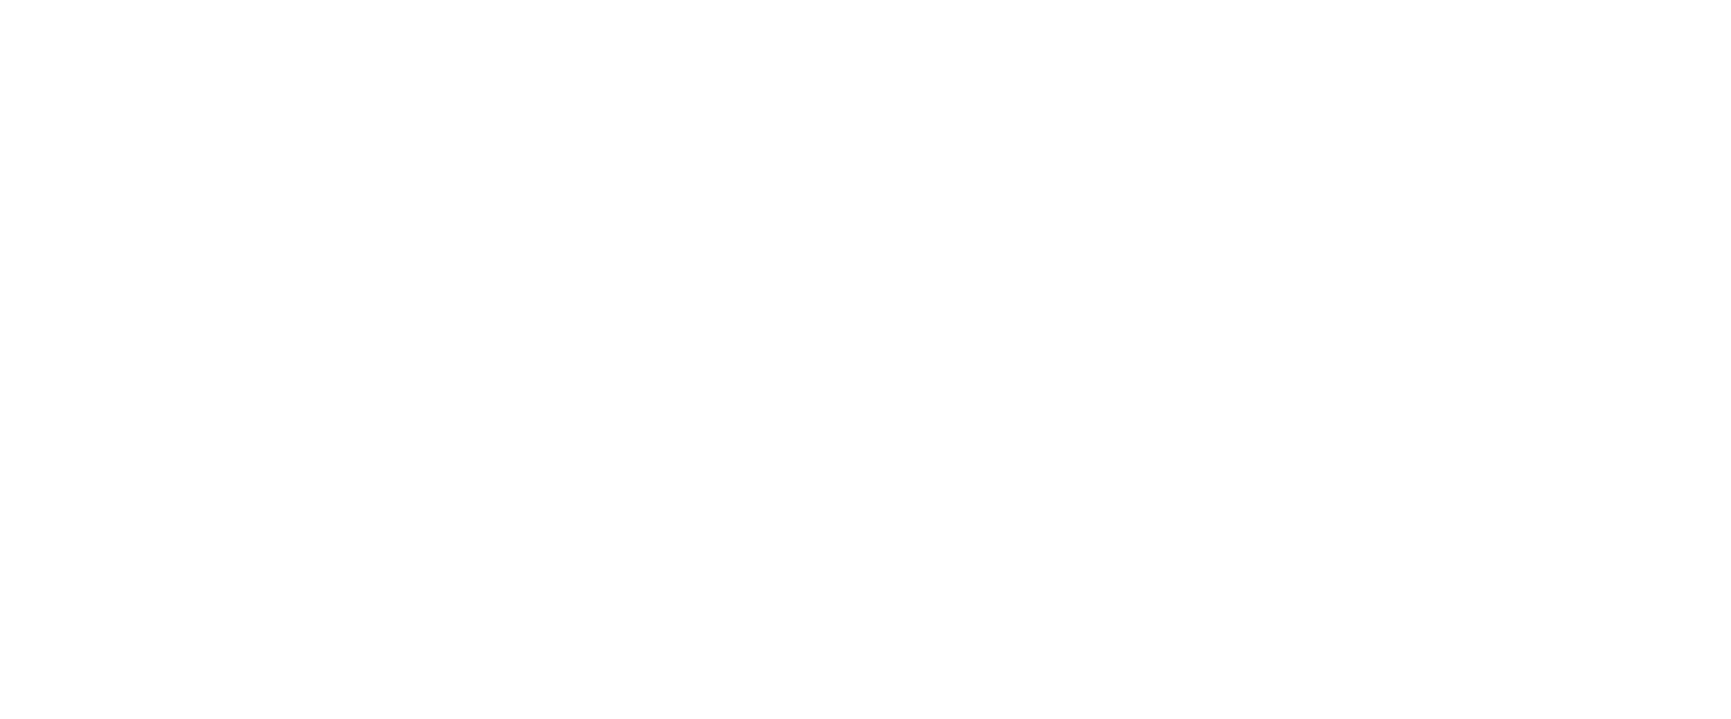 State Fair Mini Donuts logo